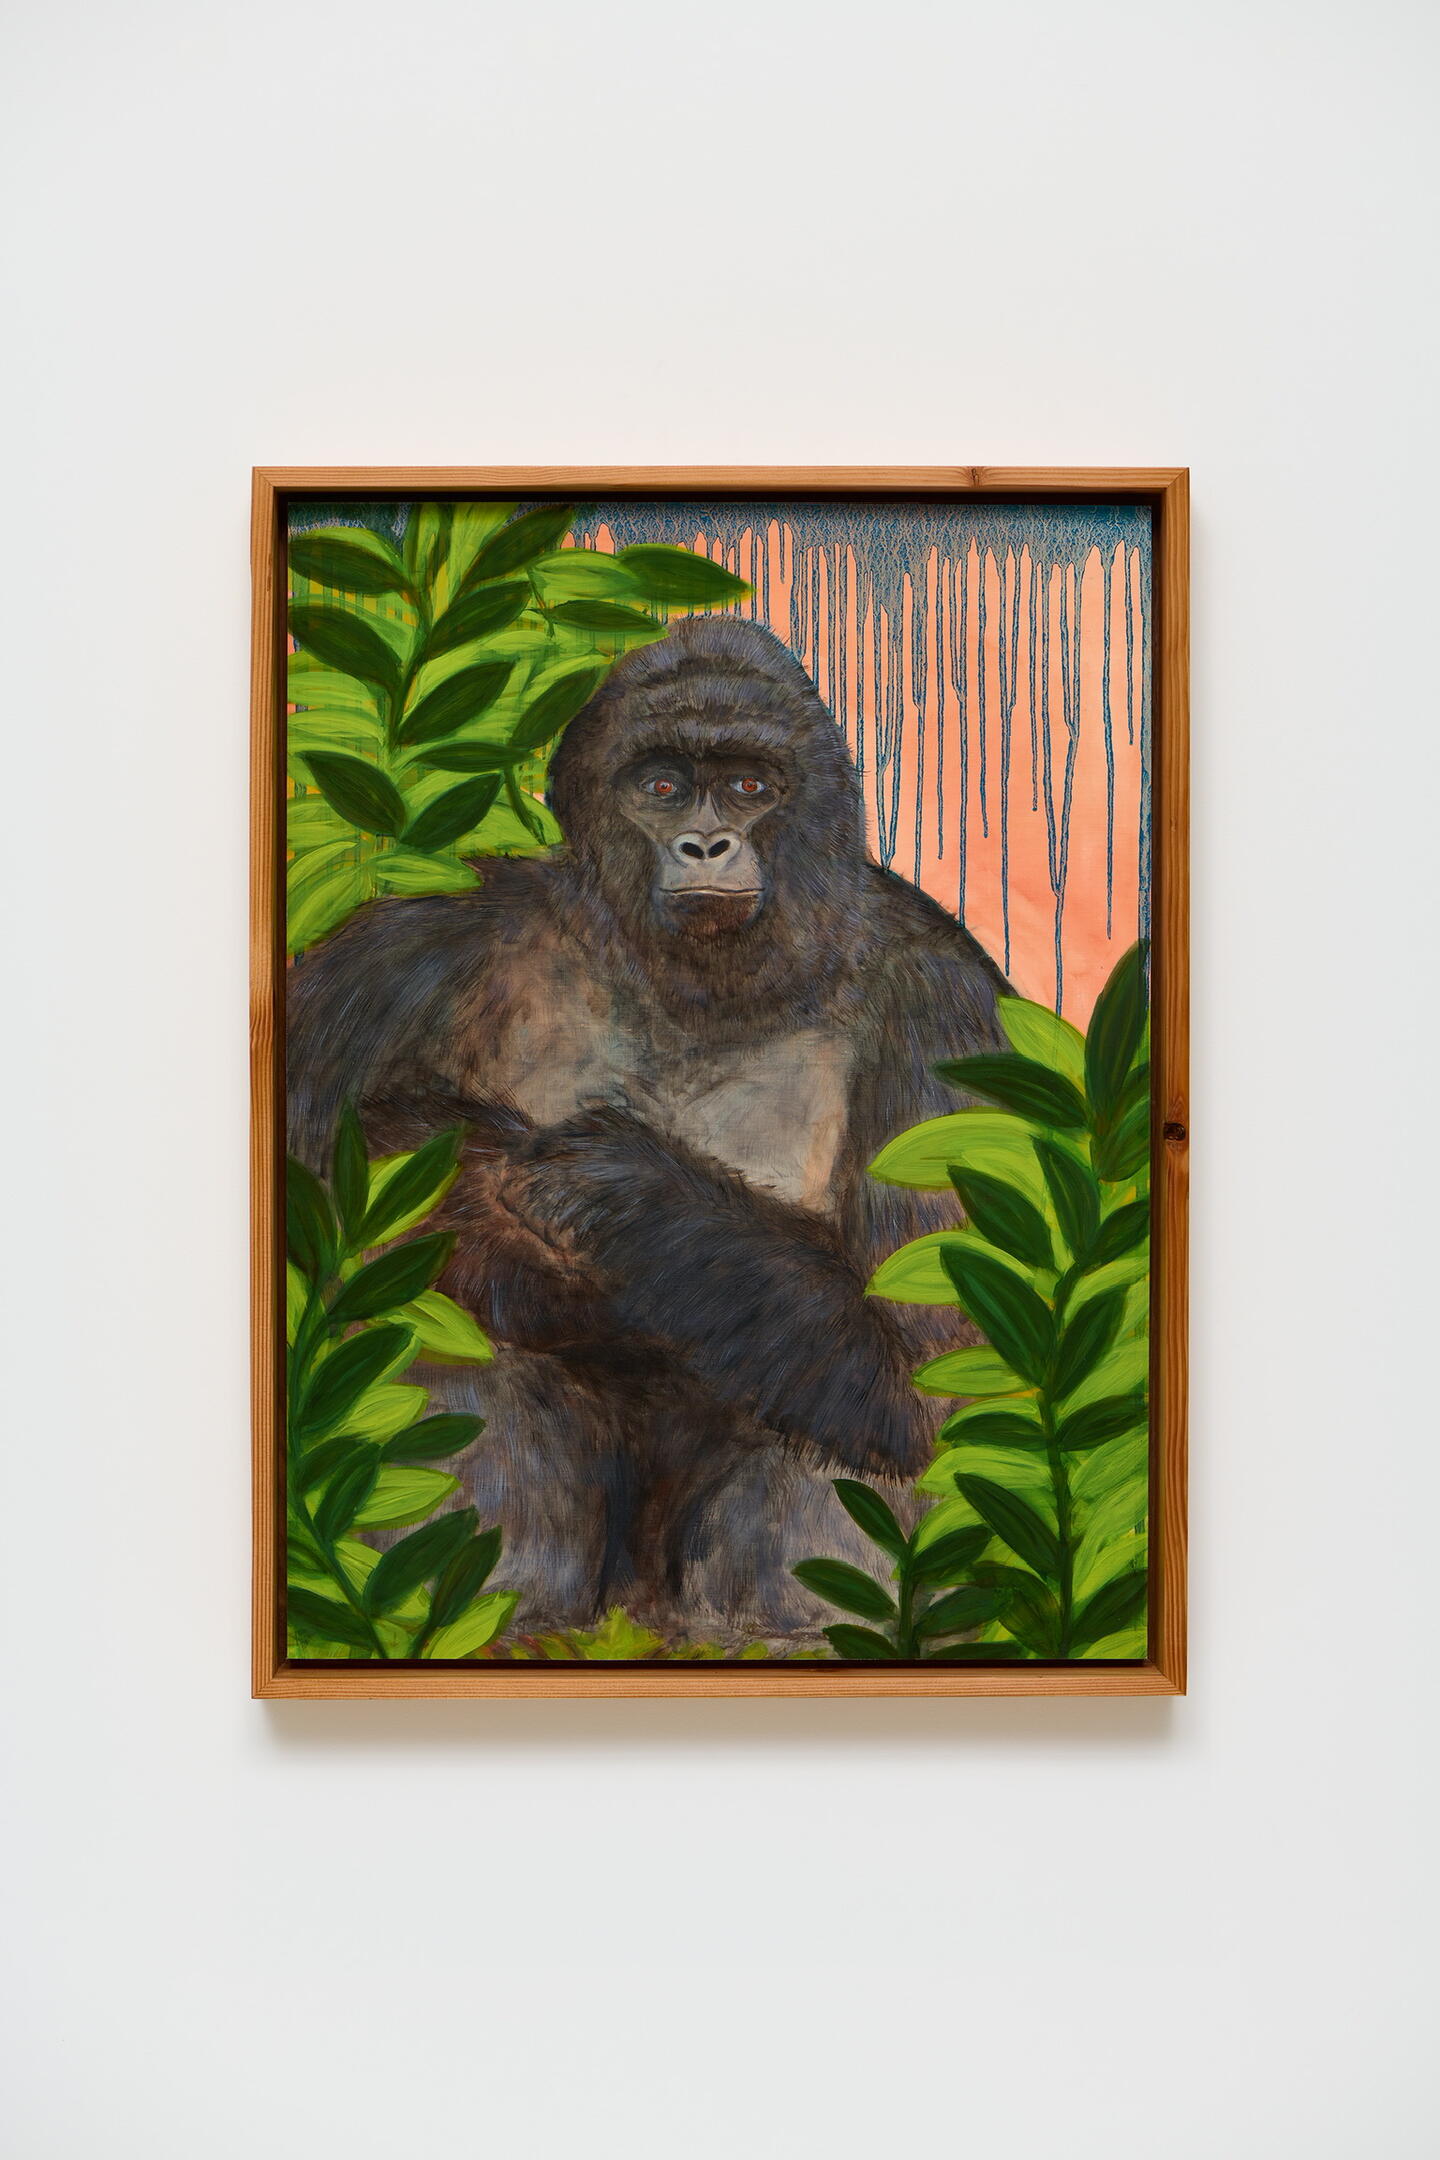 Painting of Harambe, Cincinnati Zoo silver back gorilla